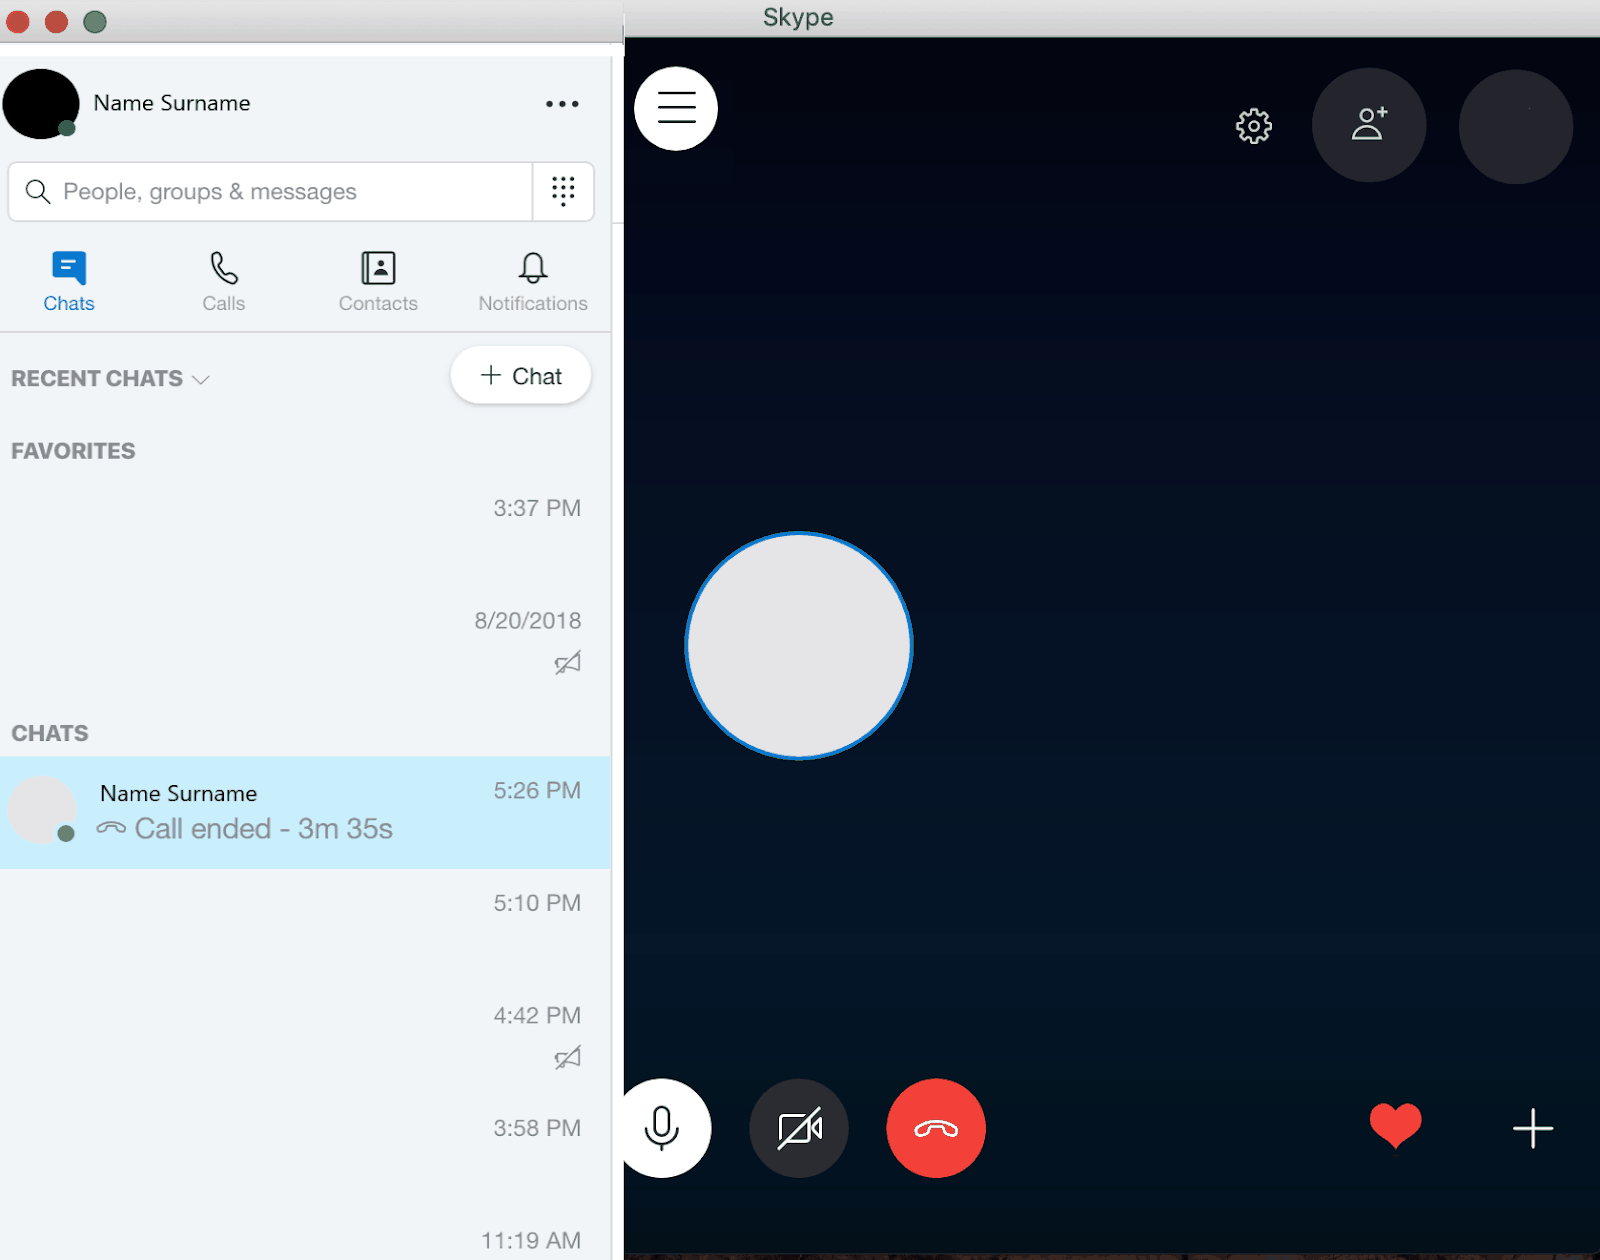 Skype home screen window during call 